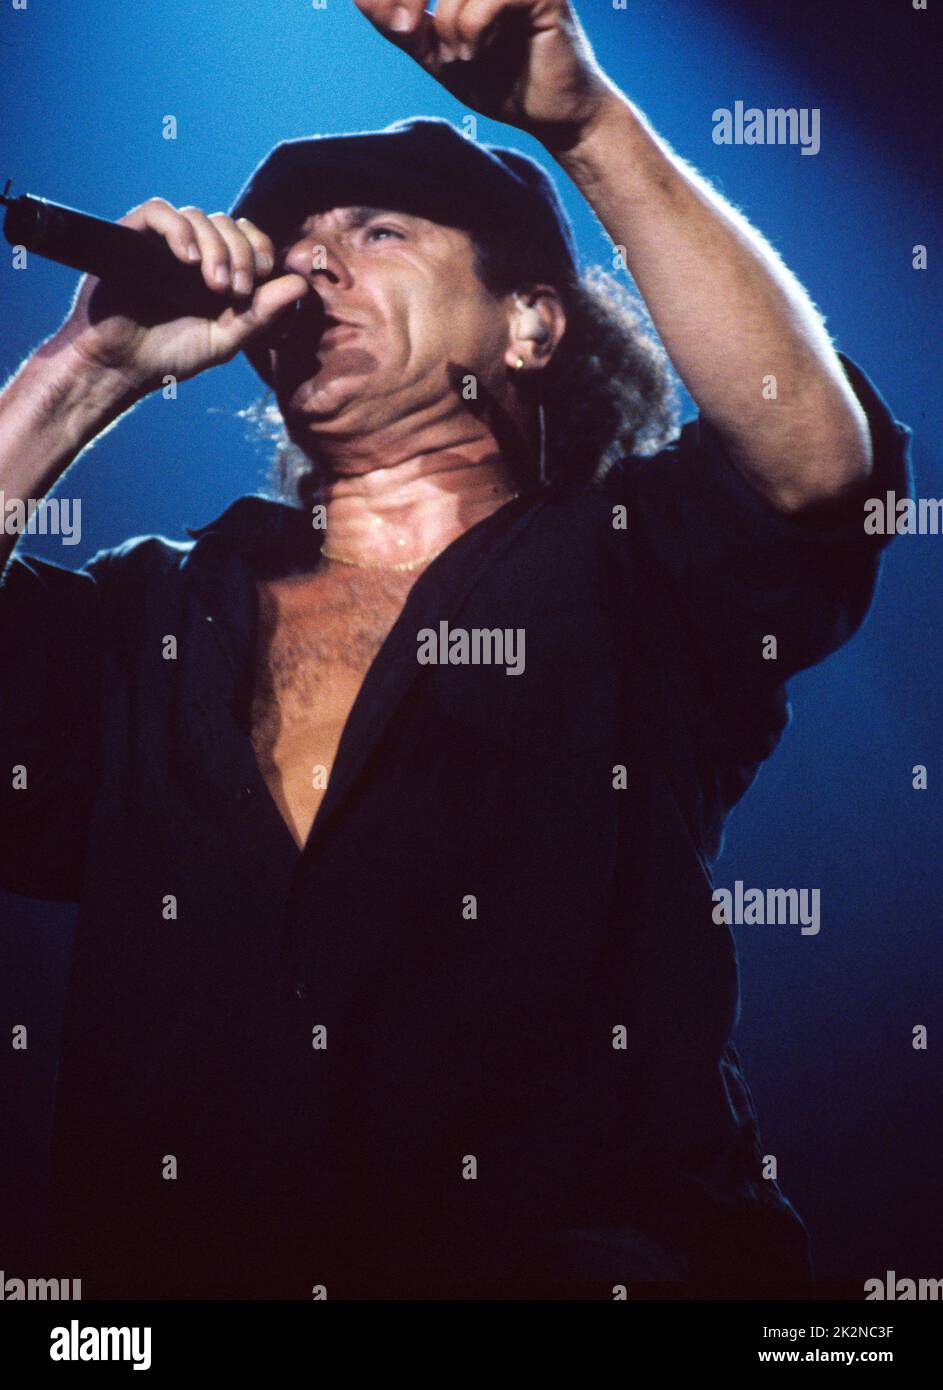 AC/DC ; Brian Johnson (vocals) ;  live at Wembley Arena, London, UK ;  June 1996 ;  Credit : Mel Longhurst / Performing Arts Images ;   www.performingartsimages.com Stock Photo